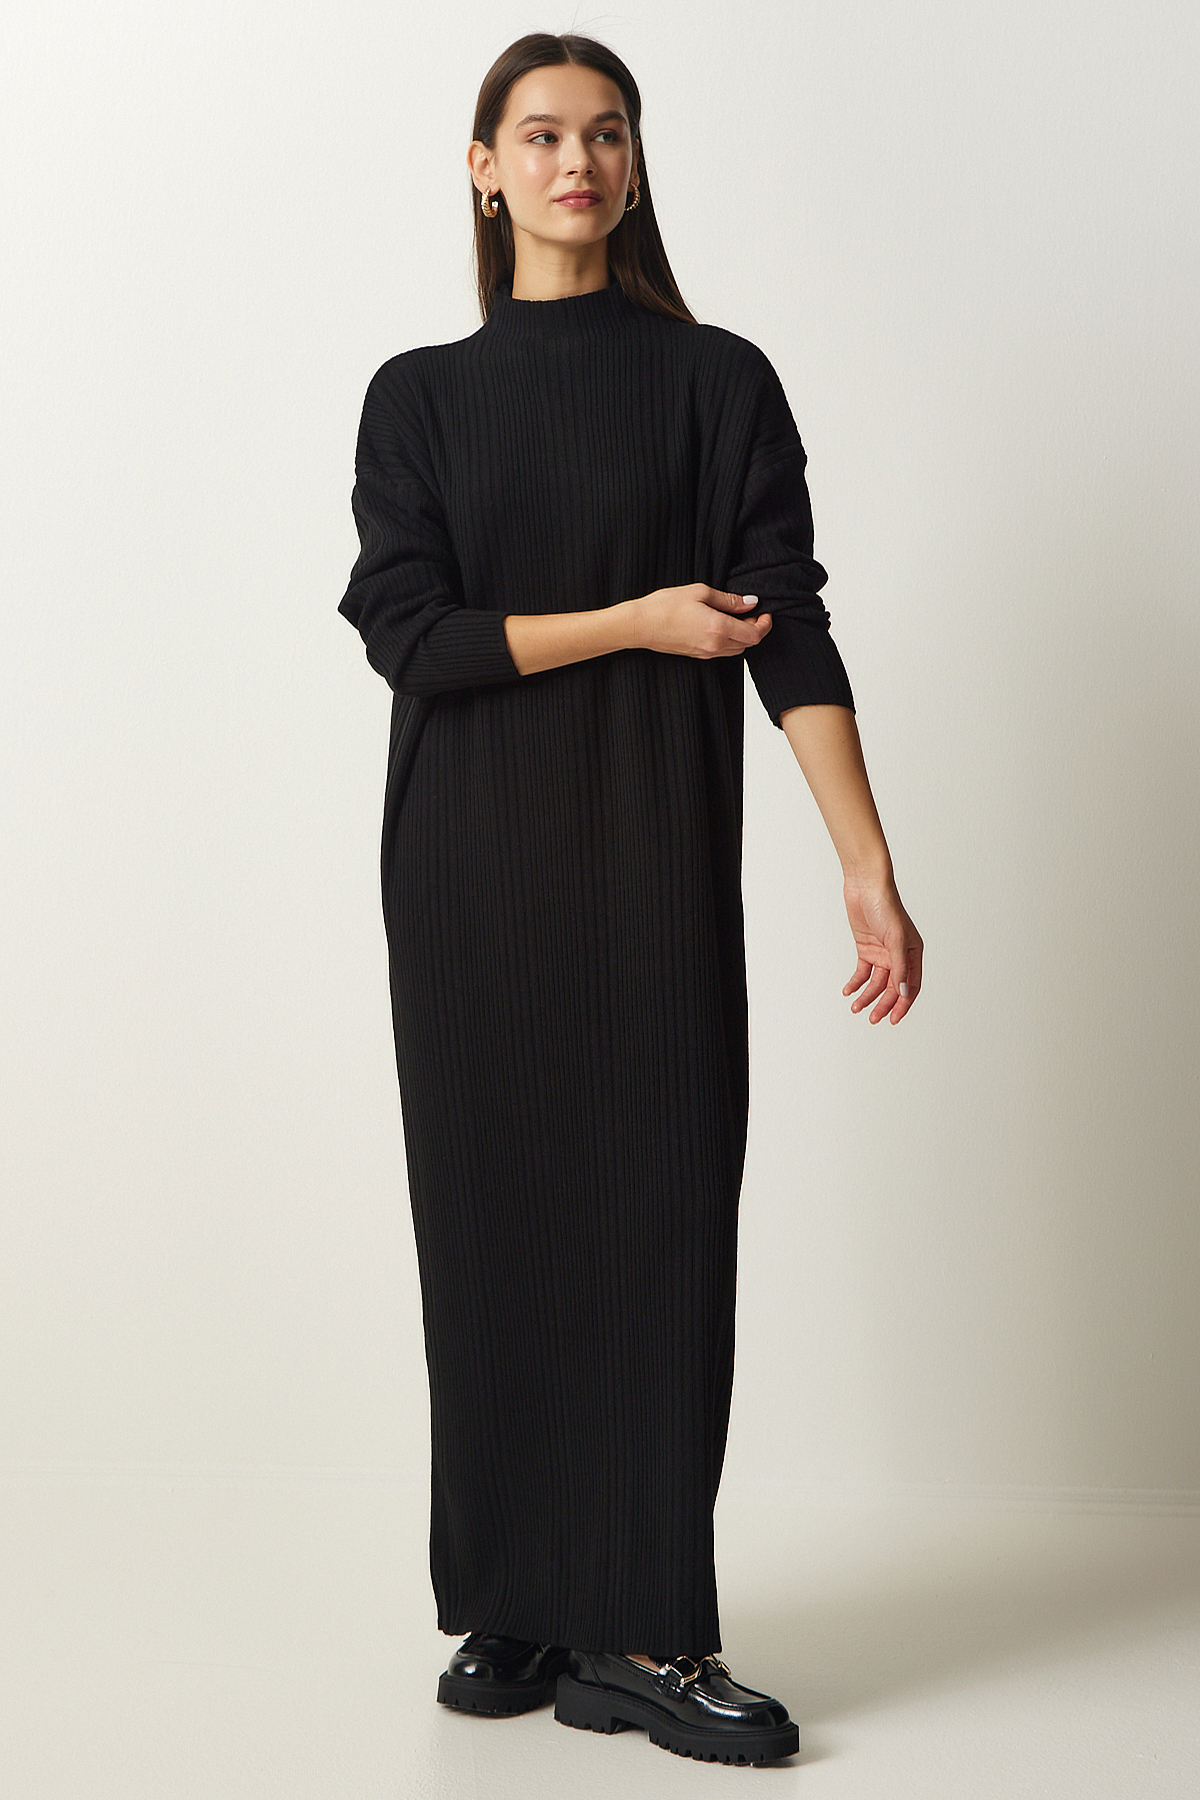 Levně Happiness İstanbul Women's Black High Neck Oversize Knitwear Dress